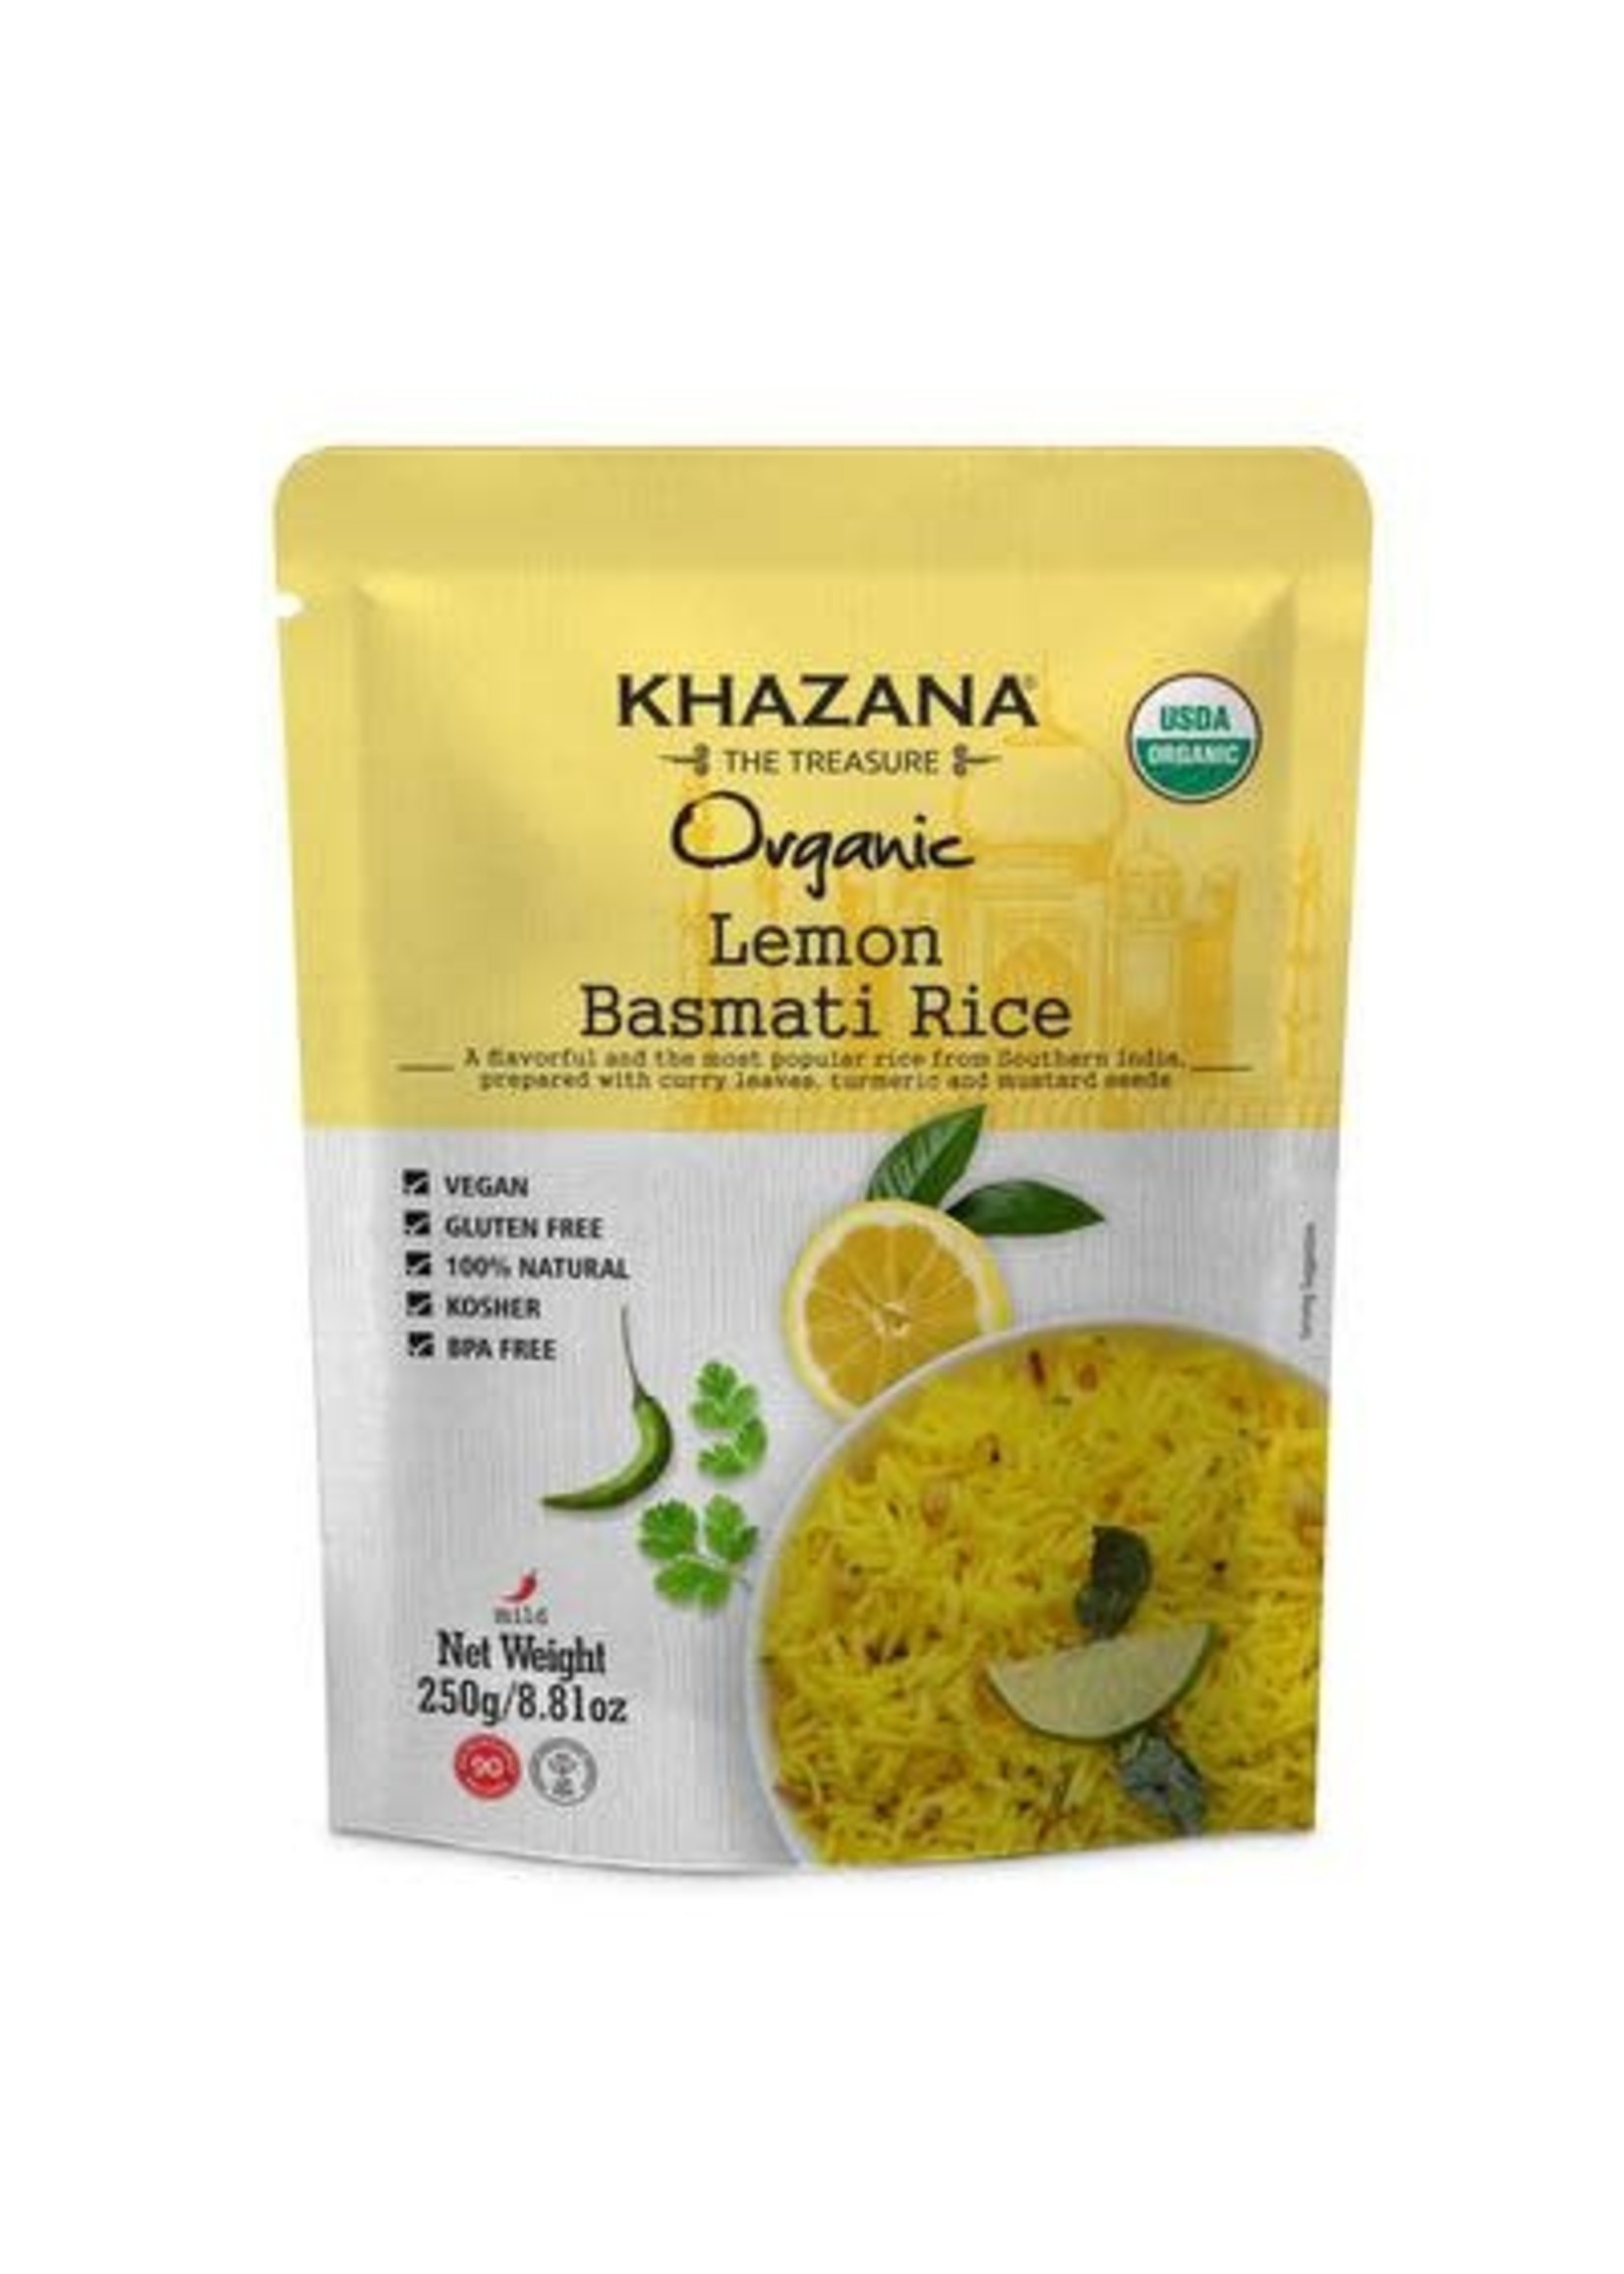 Zhazana D/C Khazana - Basmati Rice with Lemon